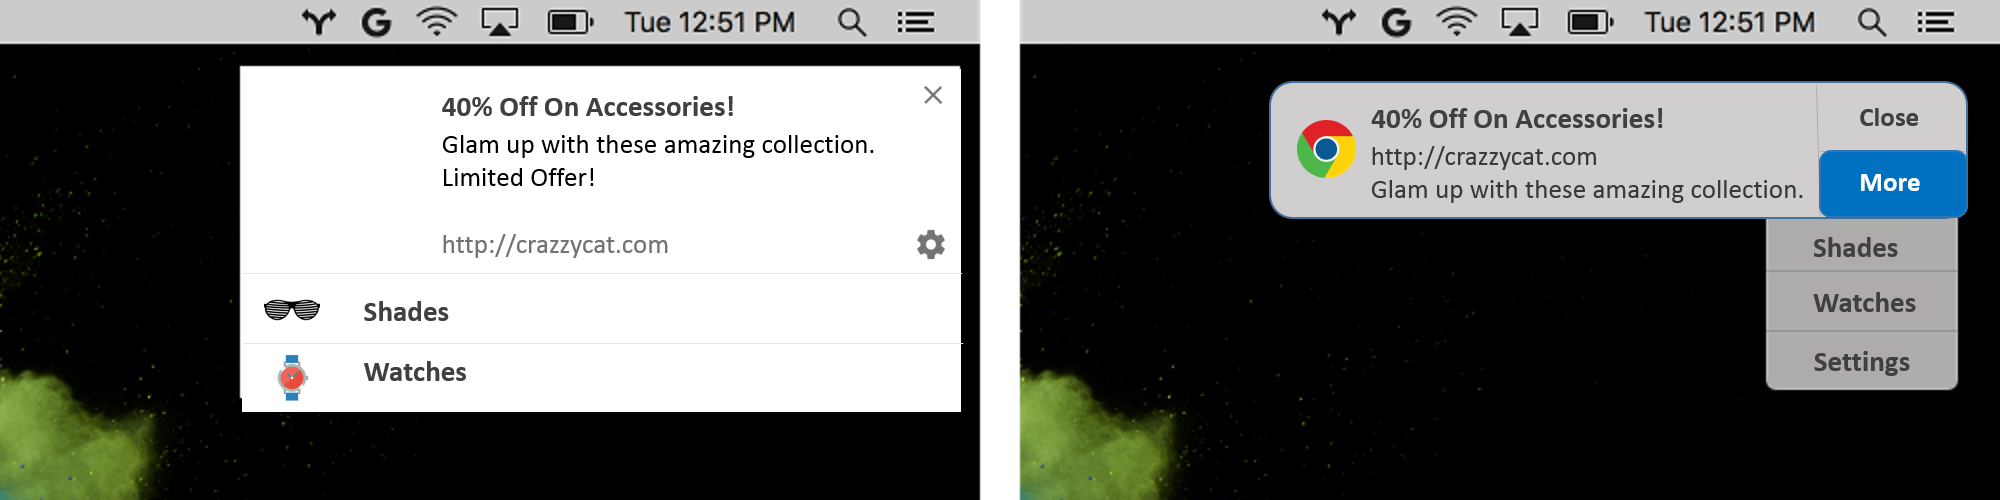 Chrome desktop push notification